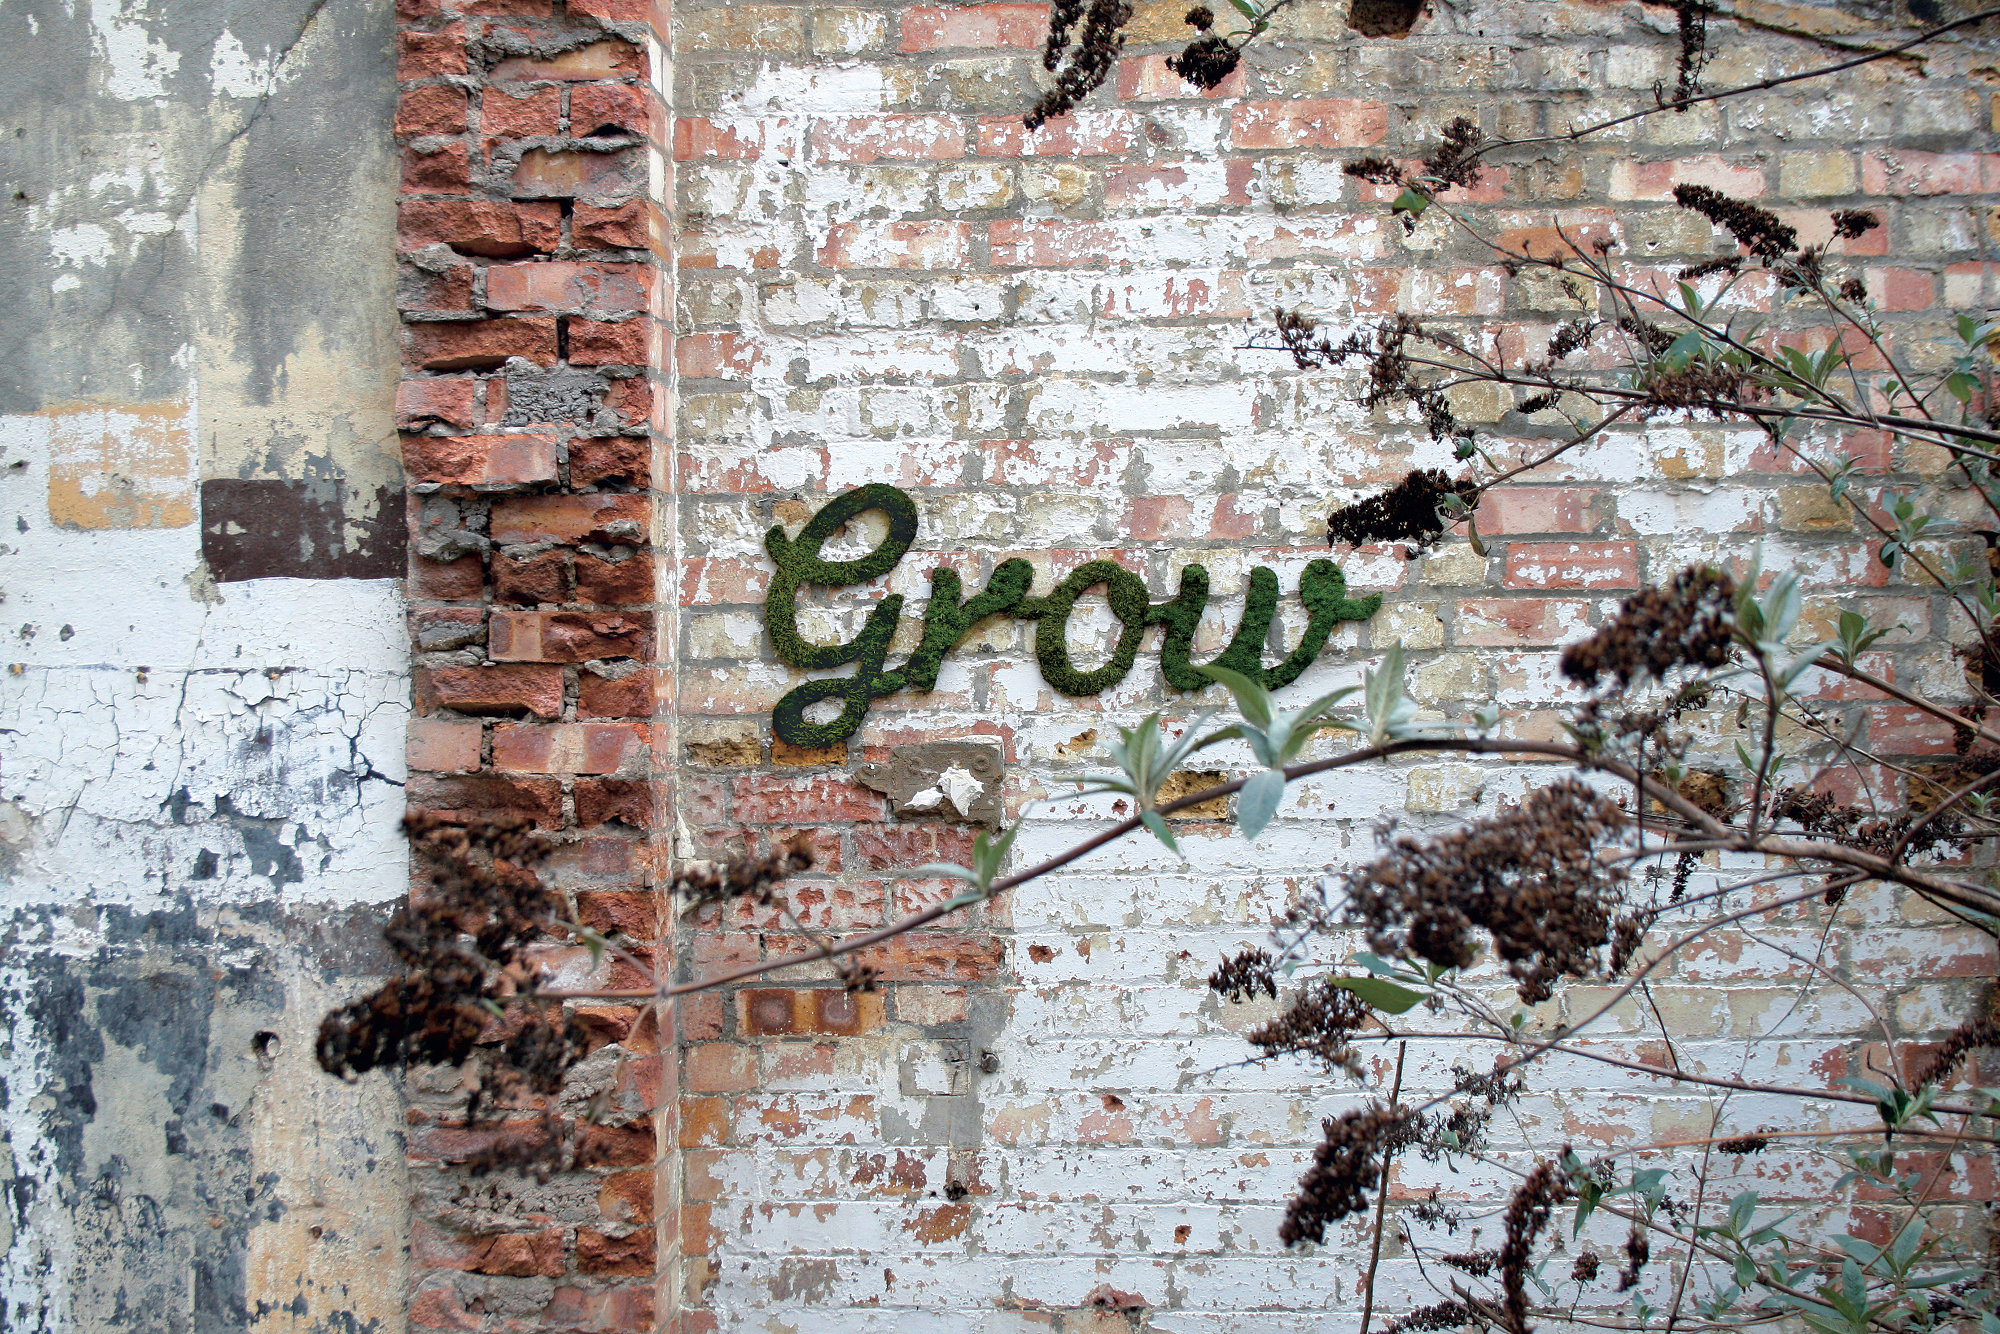 "Grow", London, England, 2012, Moos, S. 52 © Anna Garforth / Street Art Reloaded, Prestel 2015